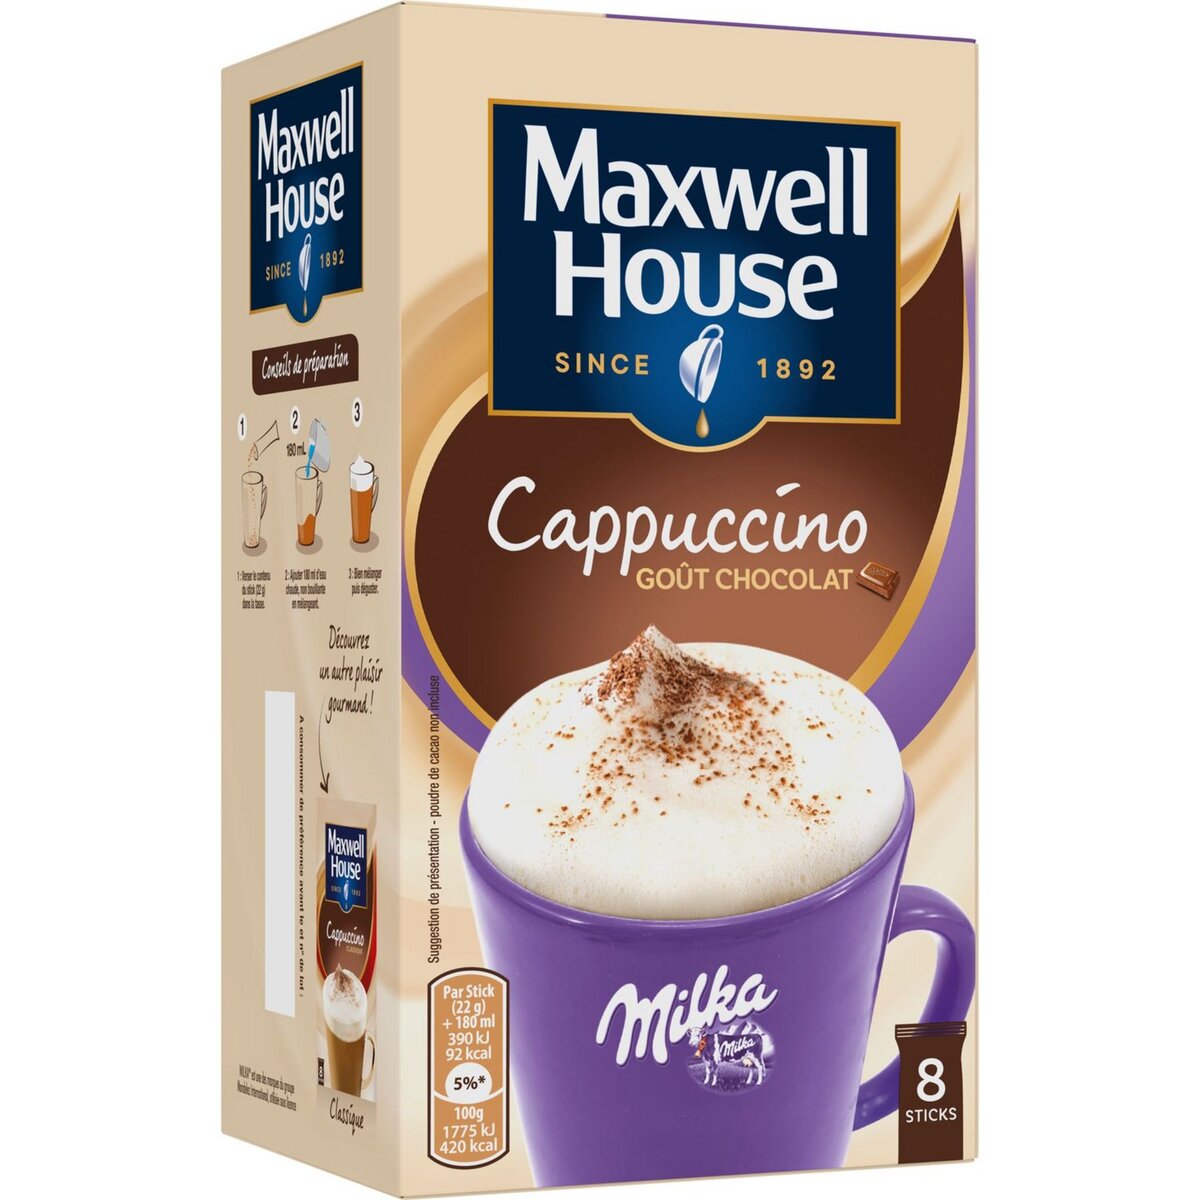 MAXWELL HOUSE Cappuccino café soluble goût chocolat en stick 8 sticks 176g